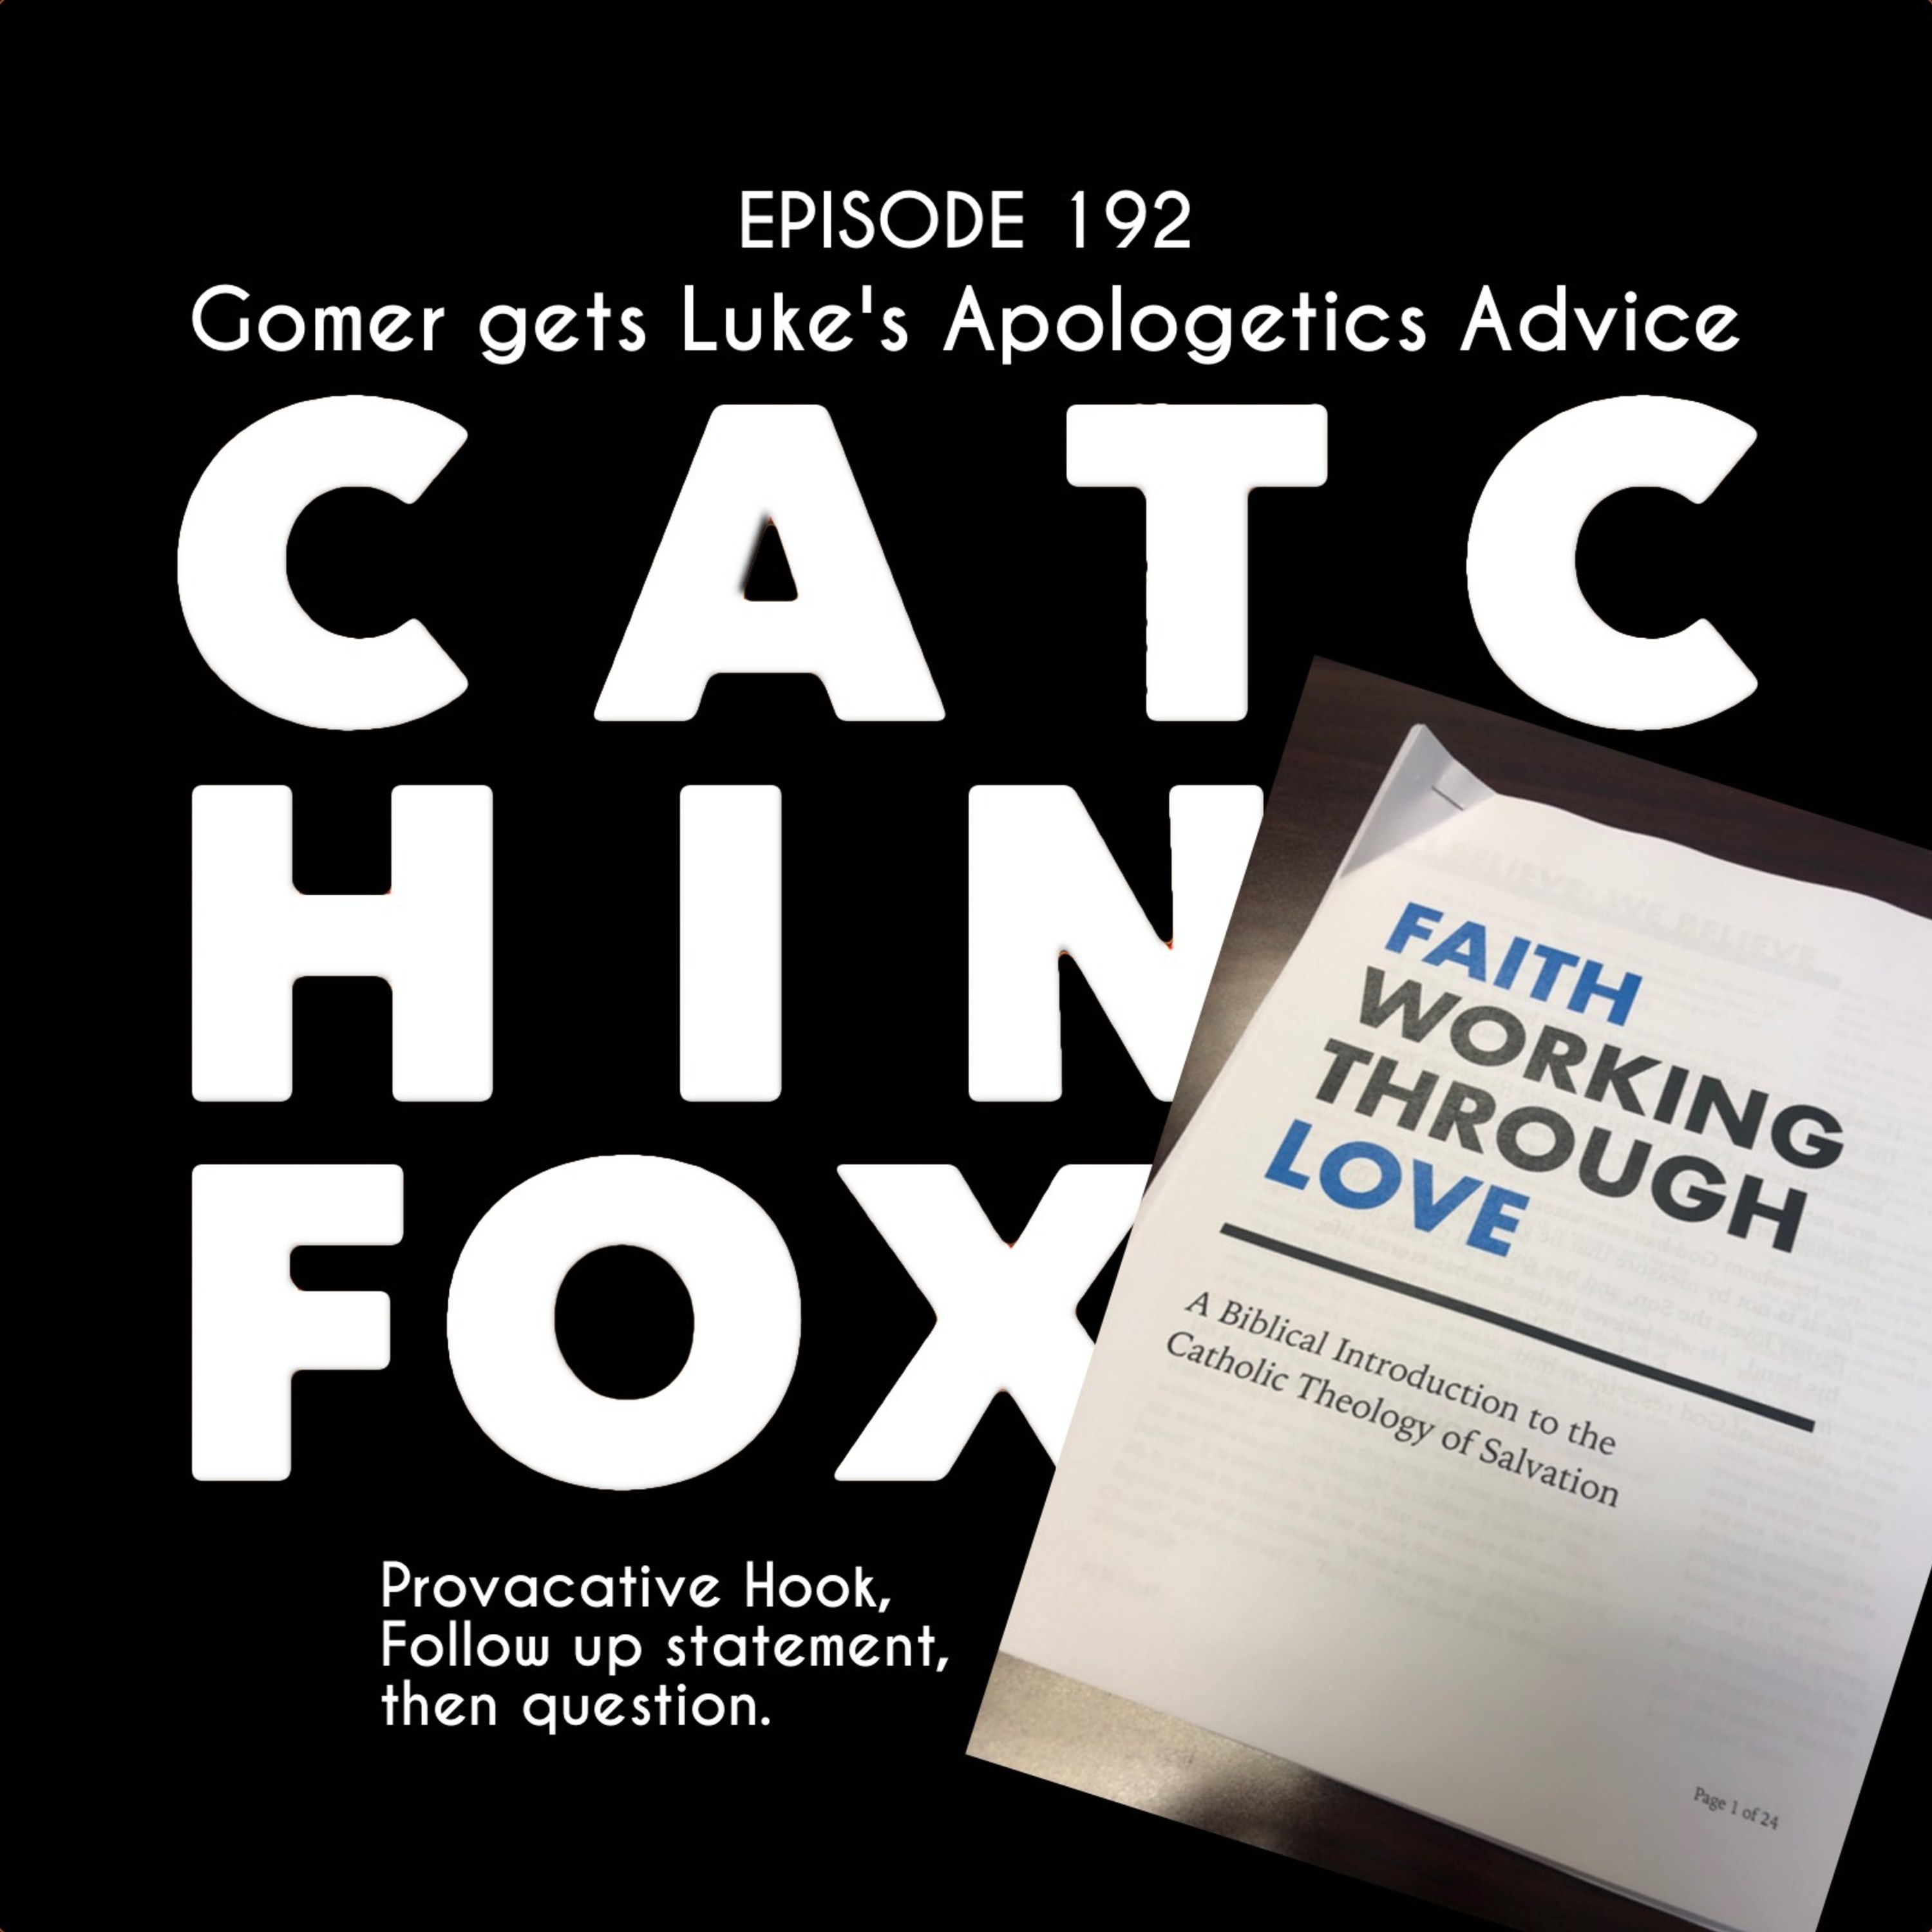 Gomer gets Luke’s Apologetics Advice